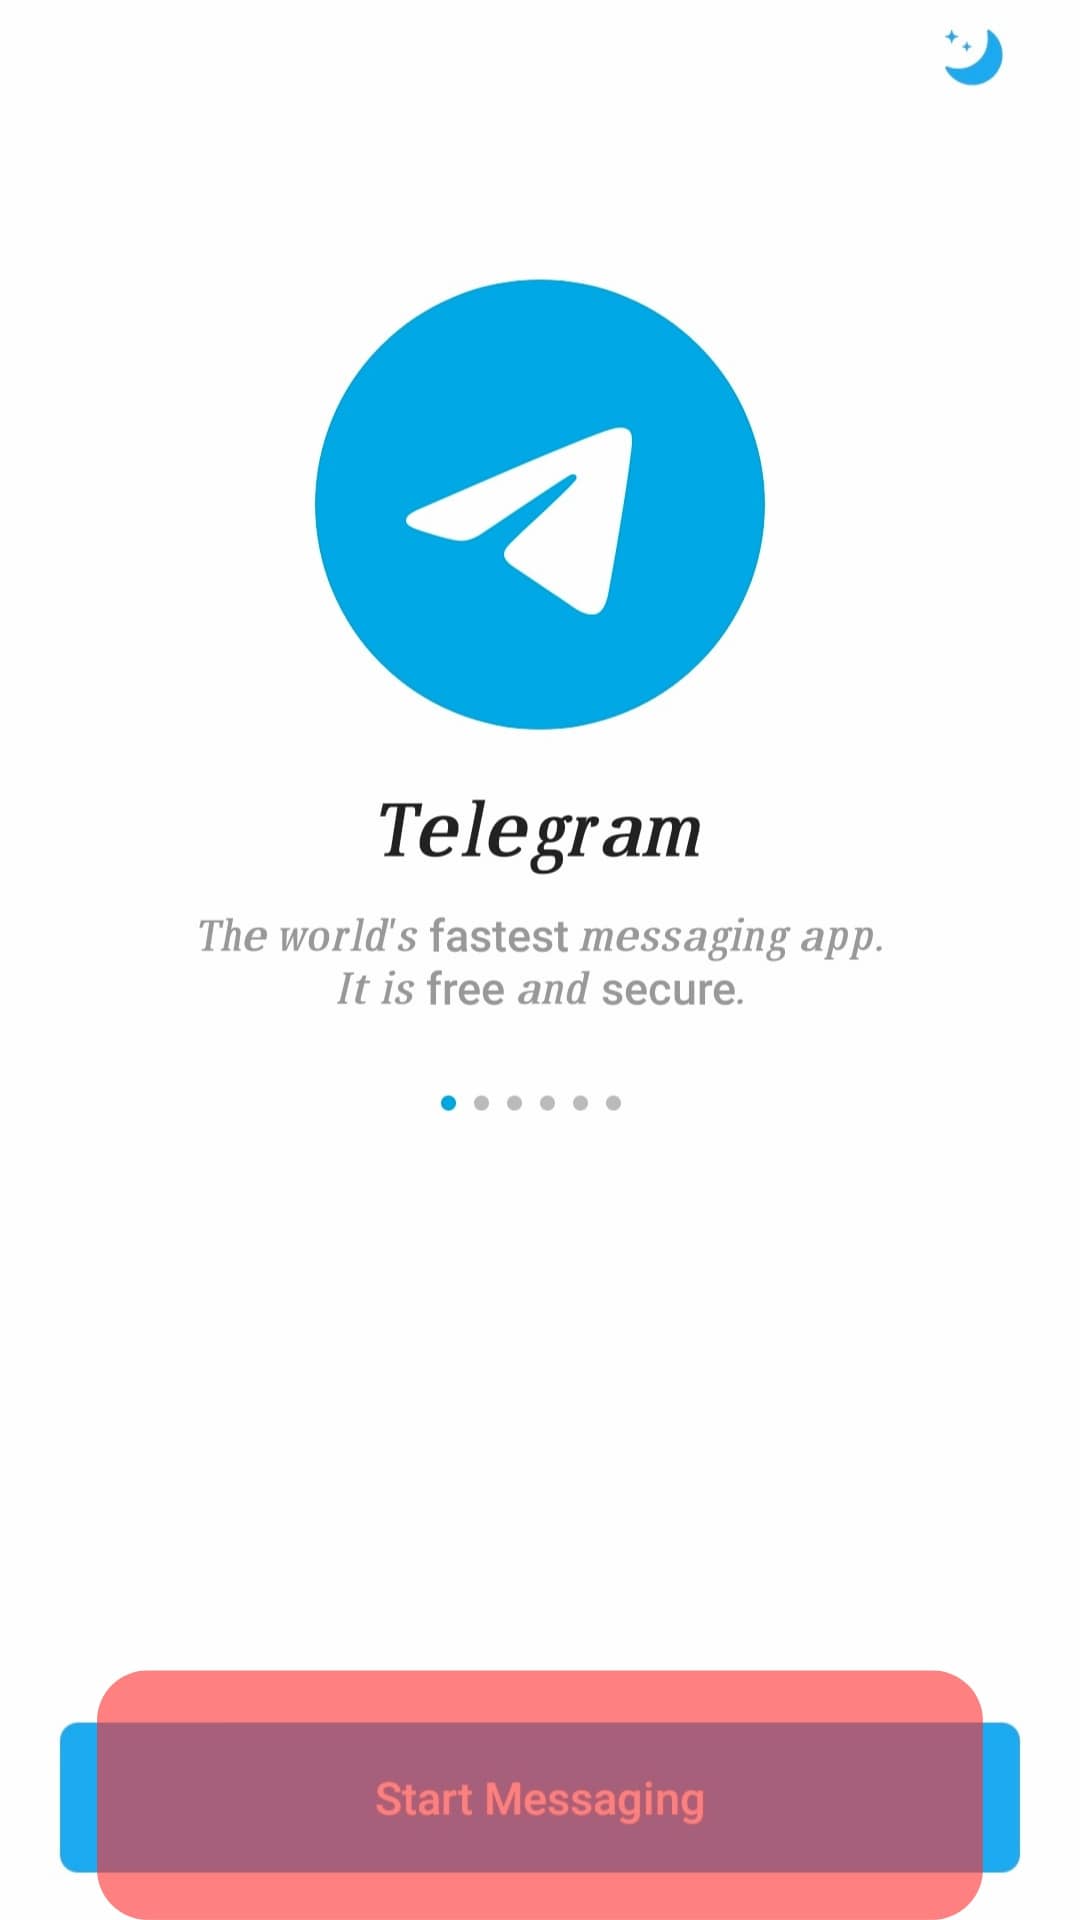 Open The Telegram App On The New Phone.